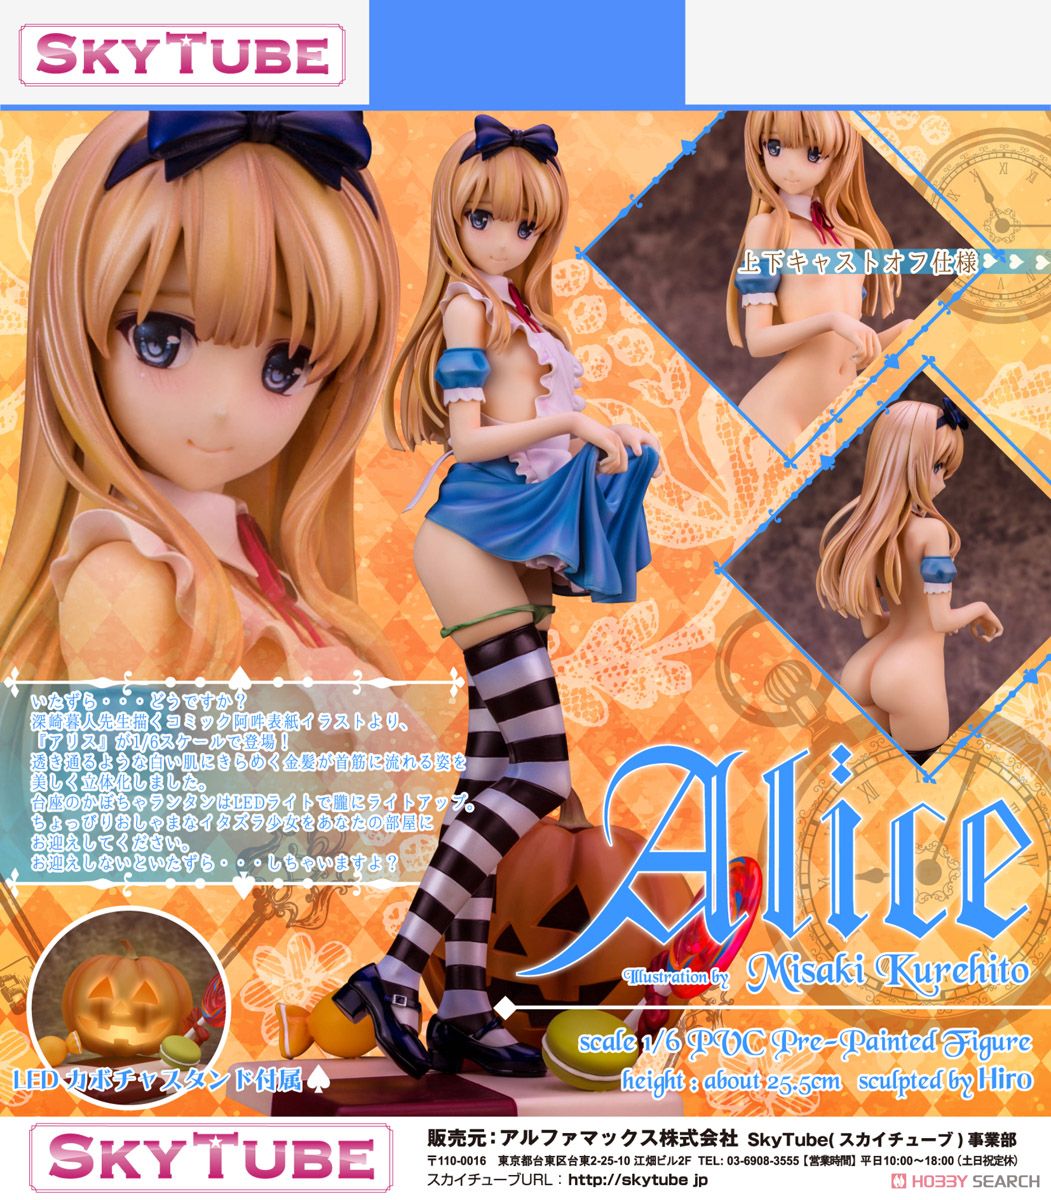 Alice Illustration af Kurehito Misaki figur